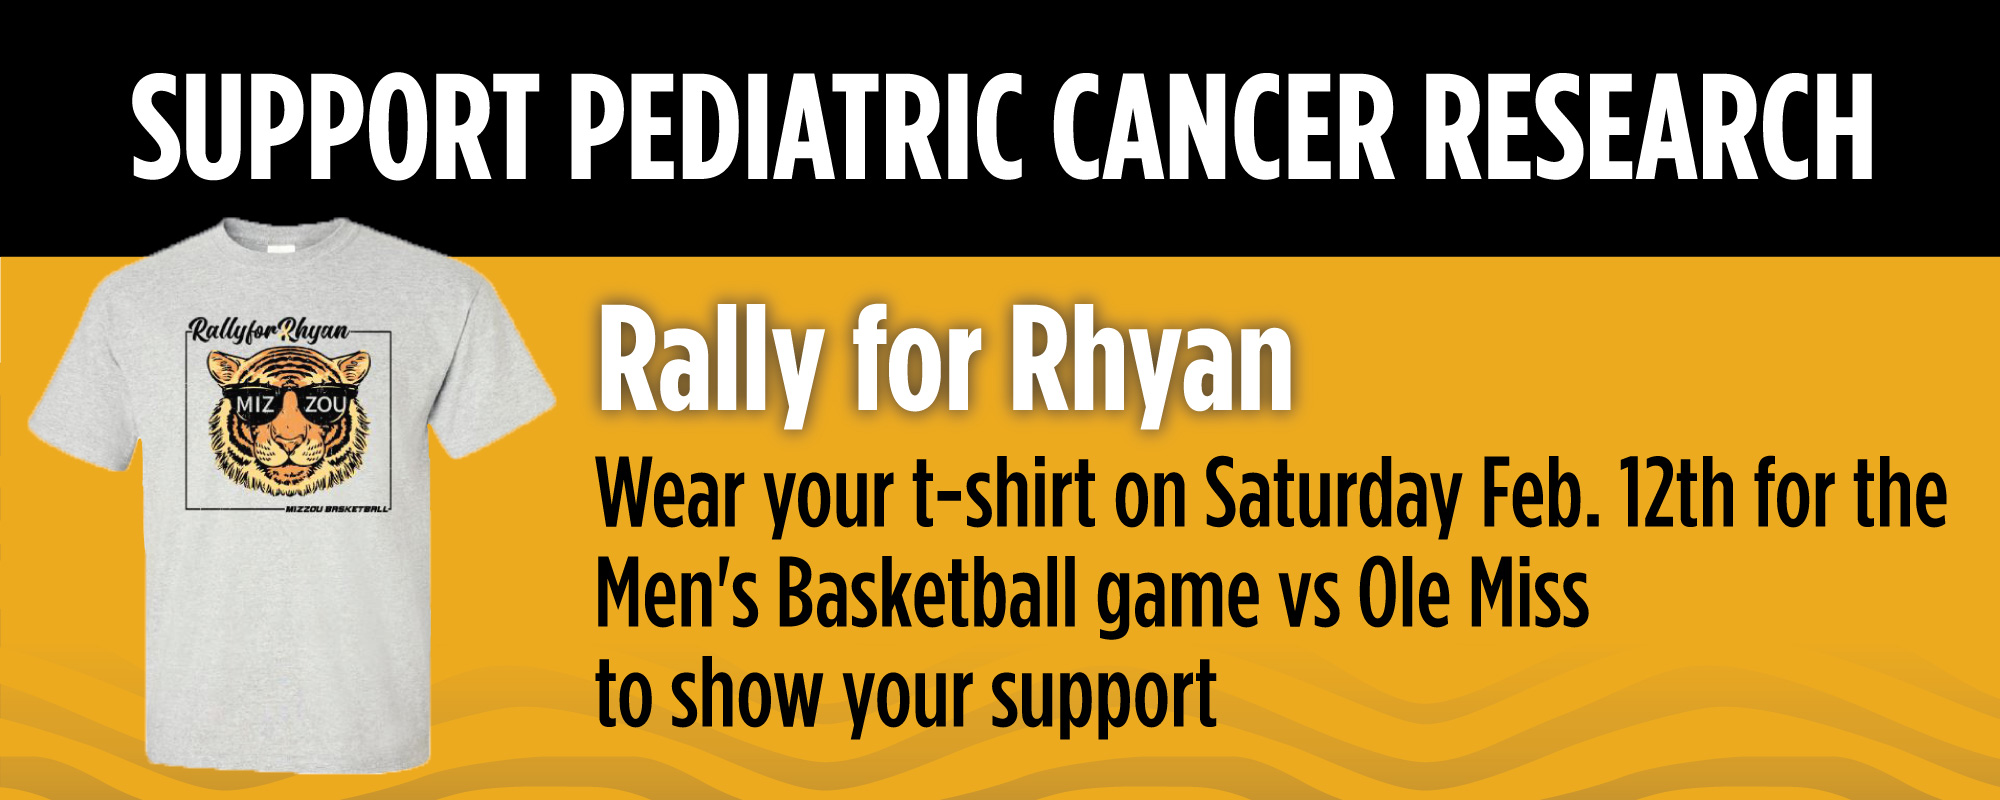 Rally for Rhyan Shirts